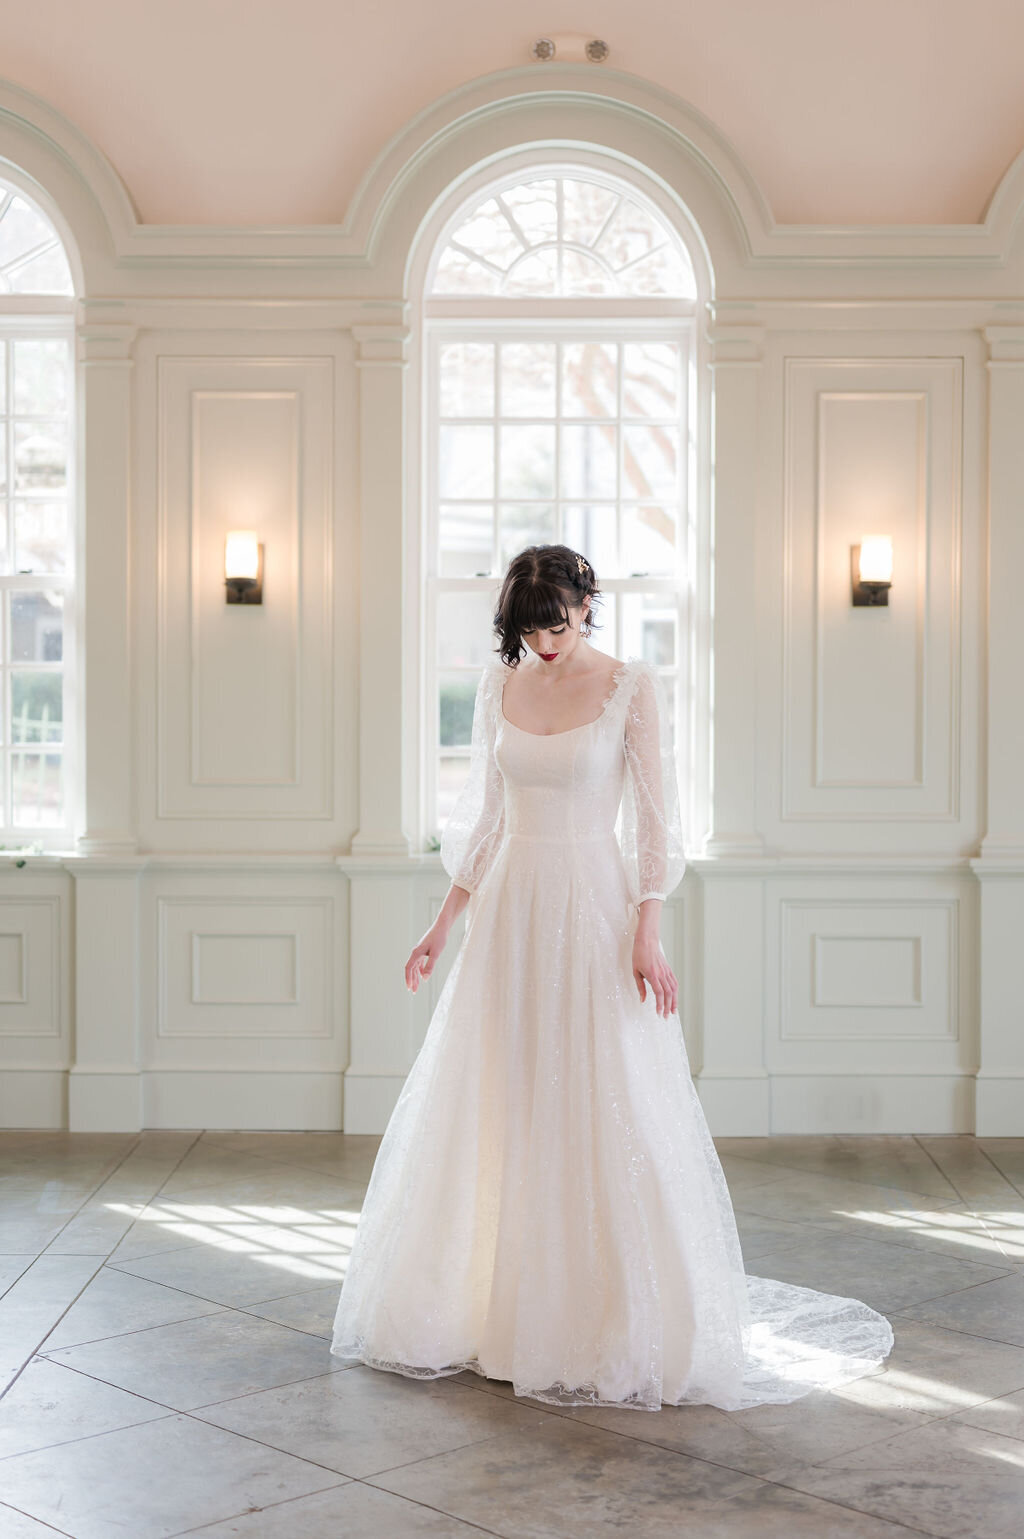 Gene is a sparkly a-line wedding dress with pockets by indie bridal designer Edith Elan.